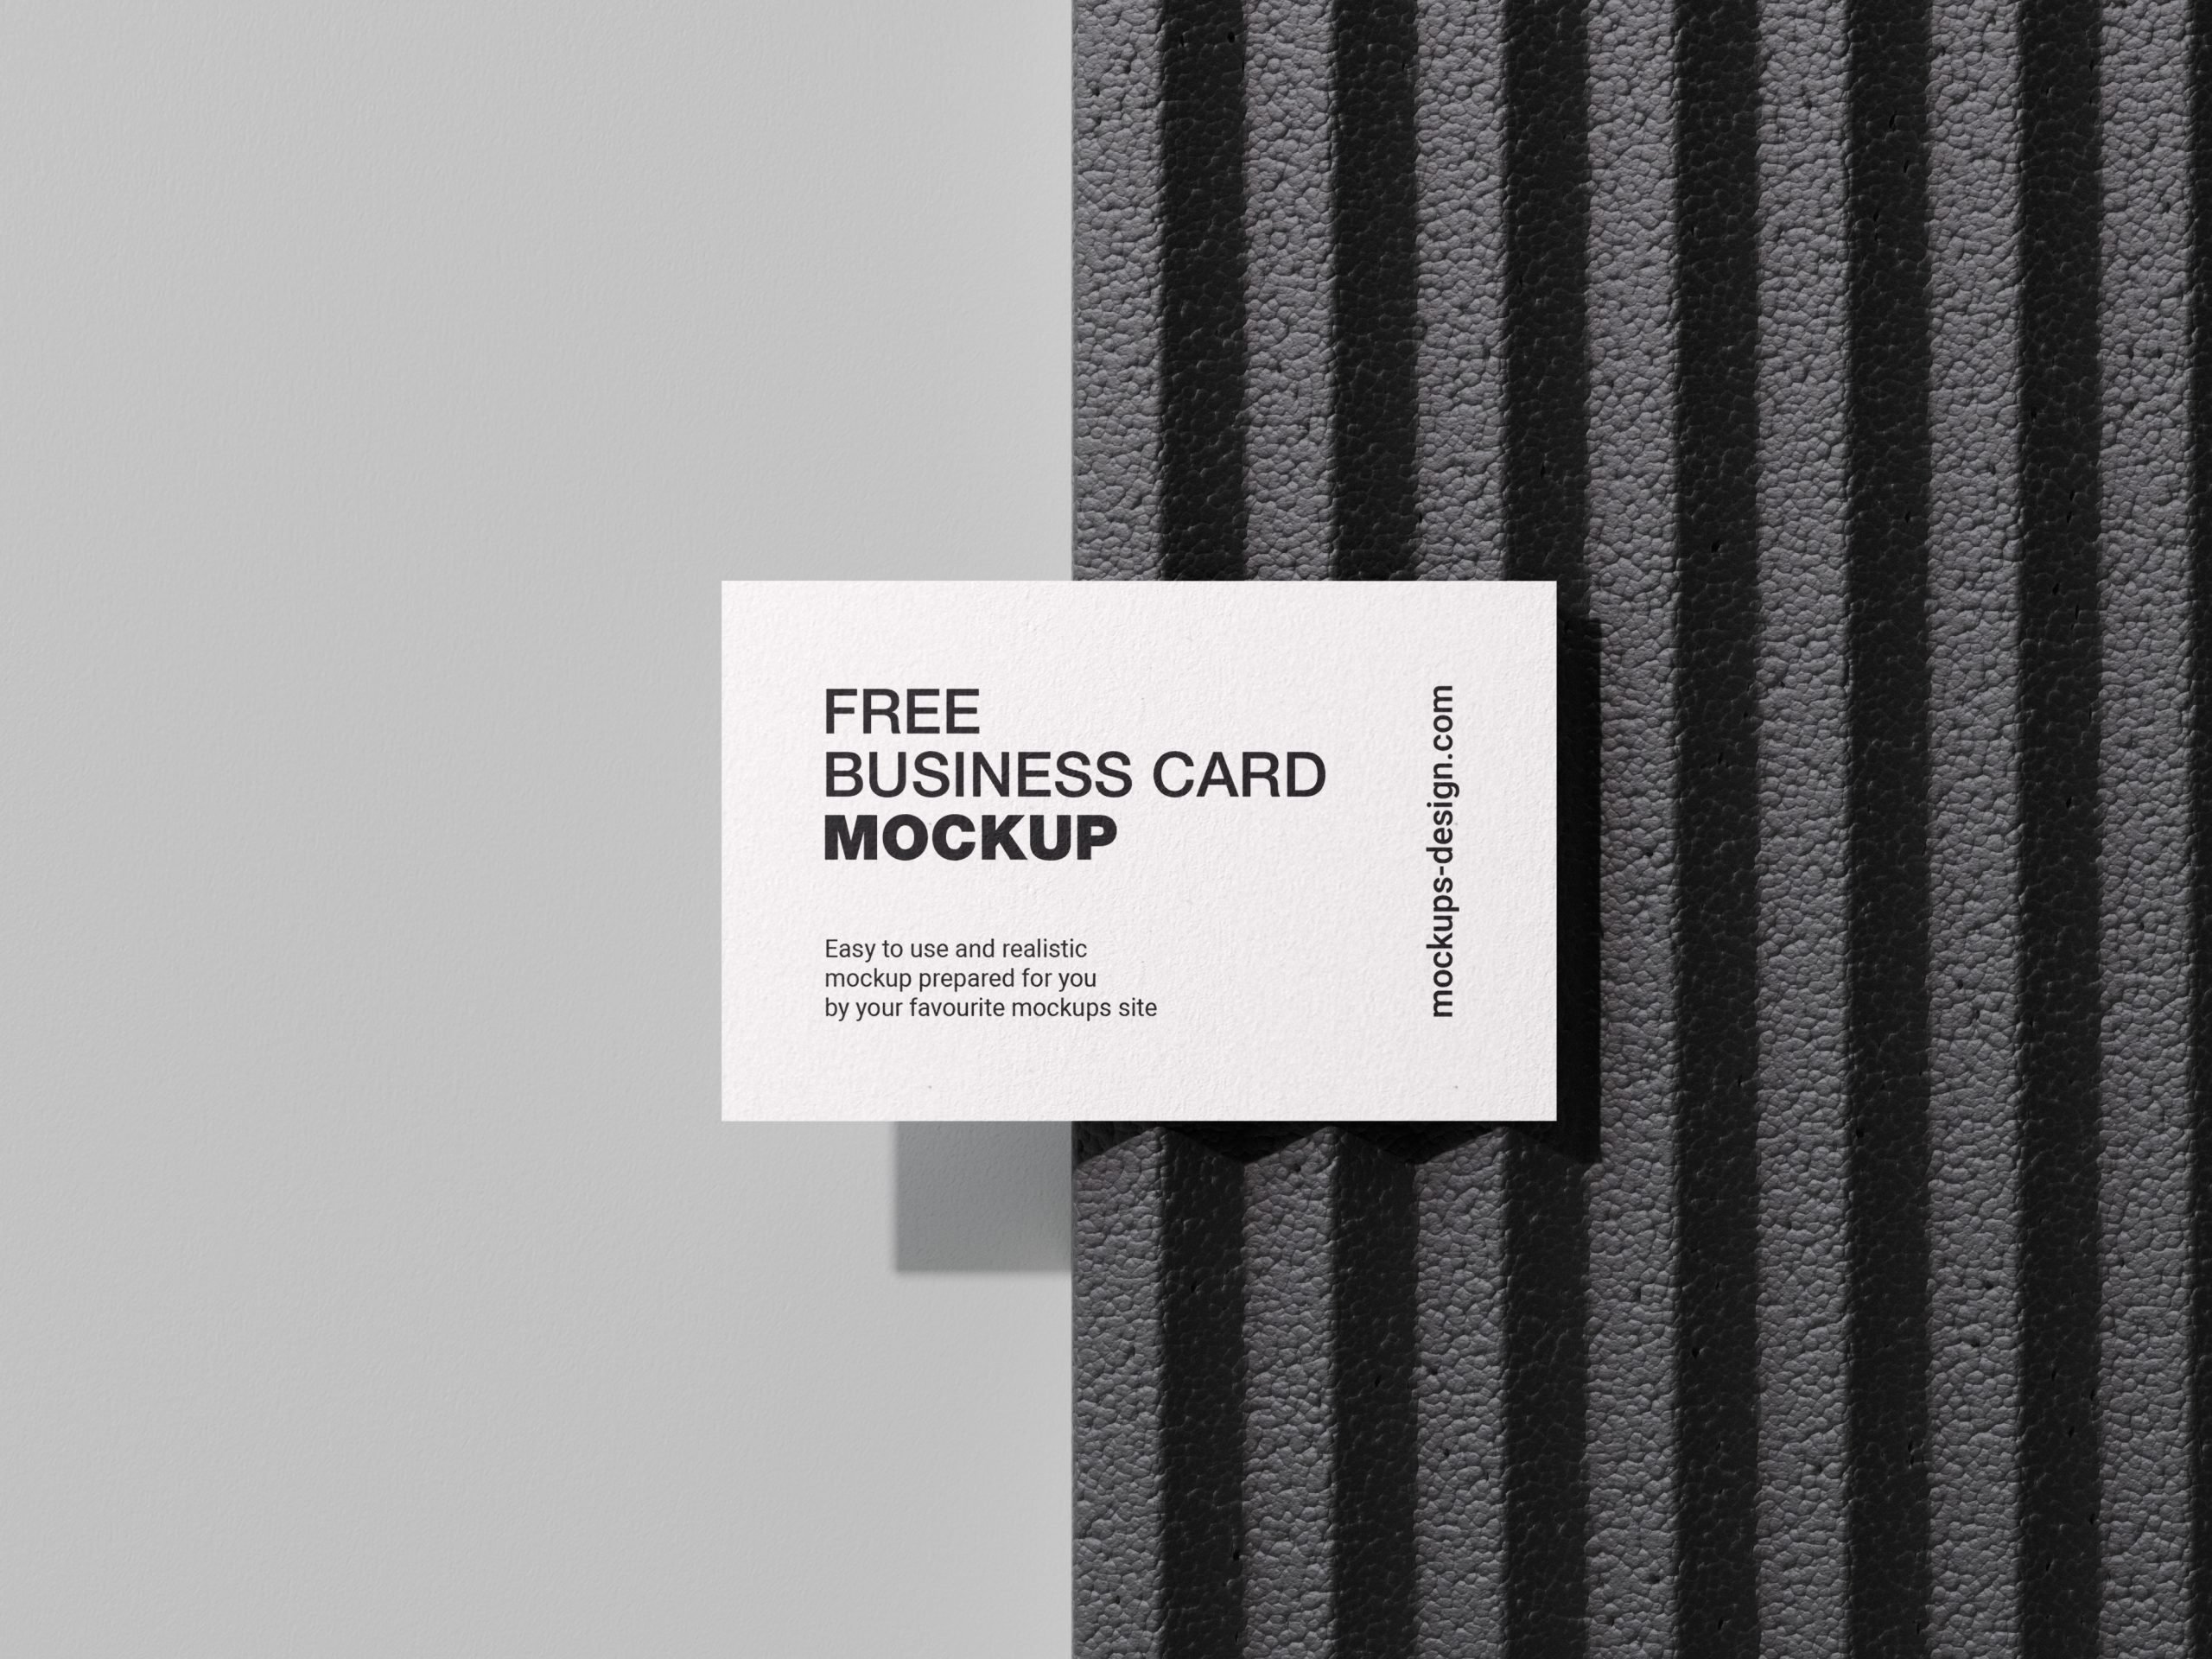 5 Scenes of Business Cards Mockups on Styrofoam FREE PSD